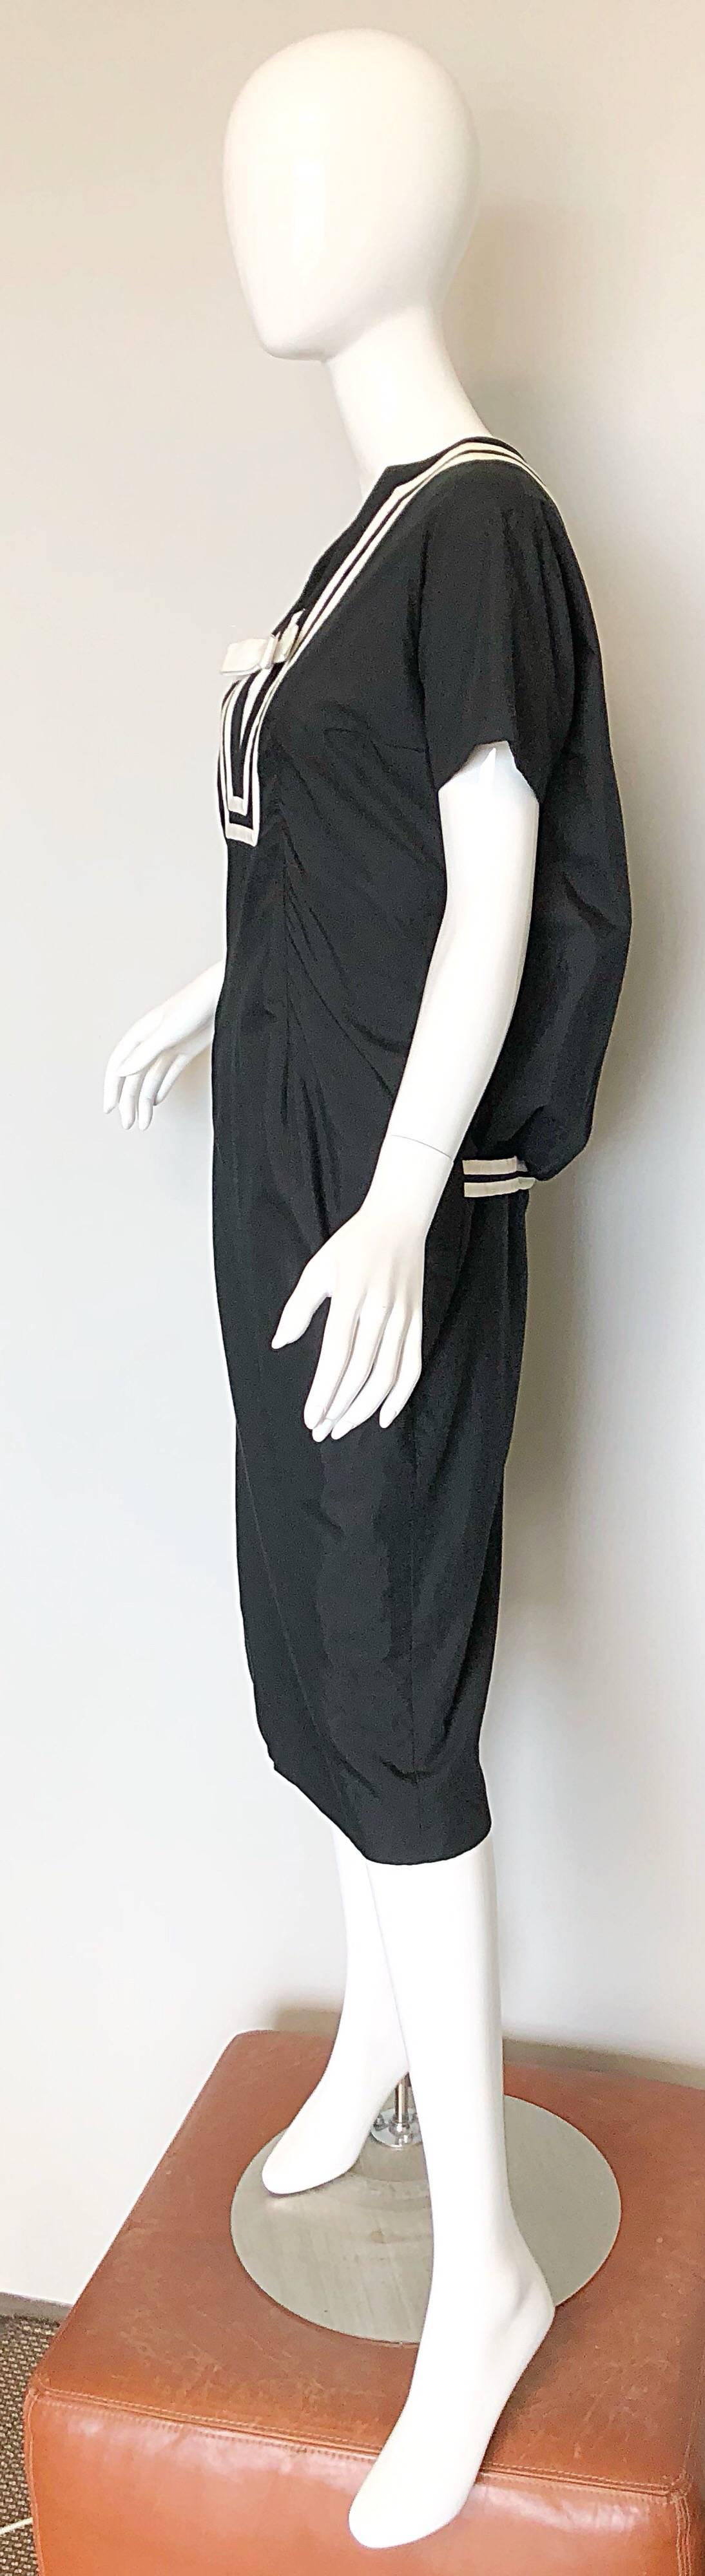 Women's Suzy Perette 1950s Large Size Black and White Nautical Vintage 50s Cotton Dress For Sale